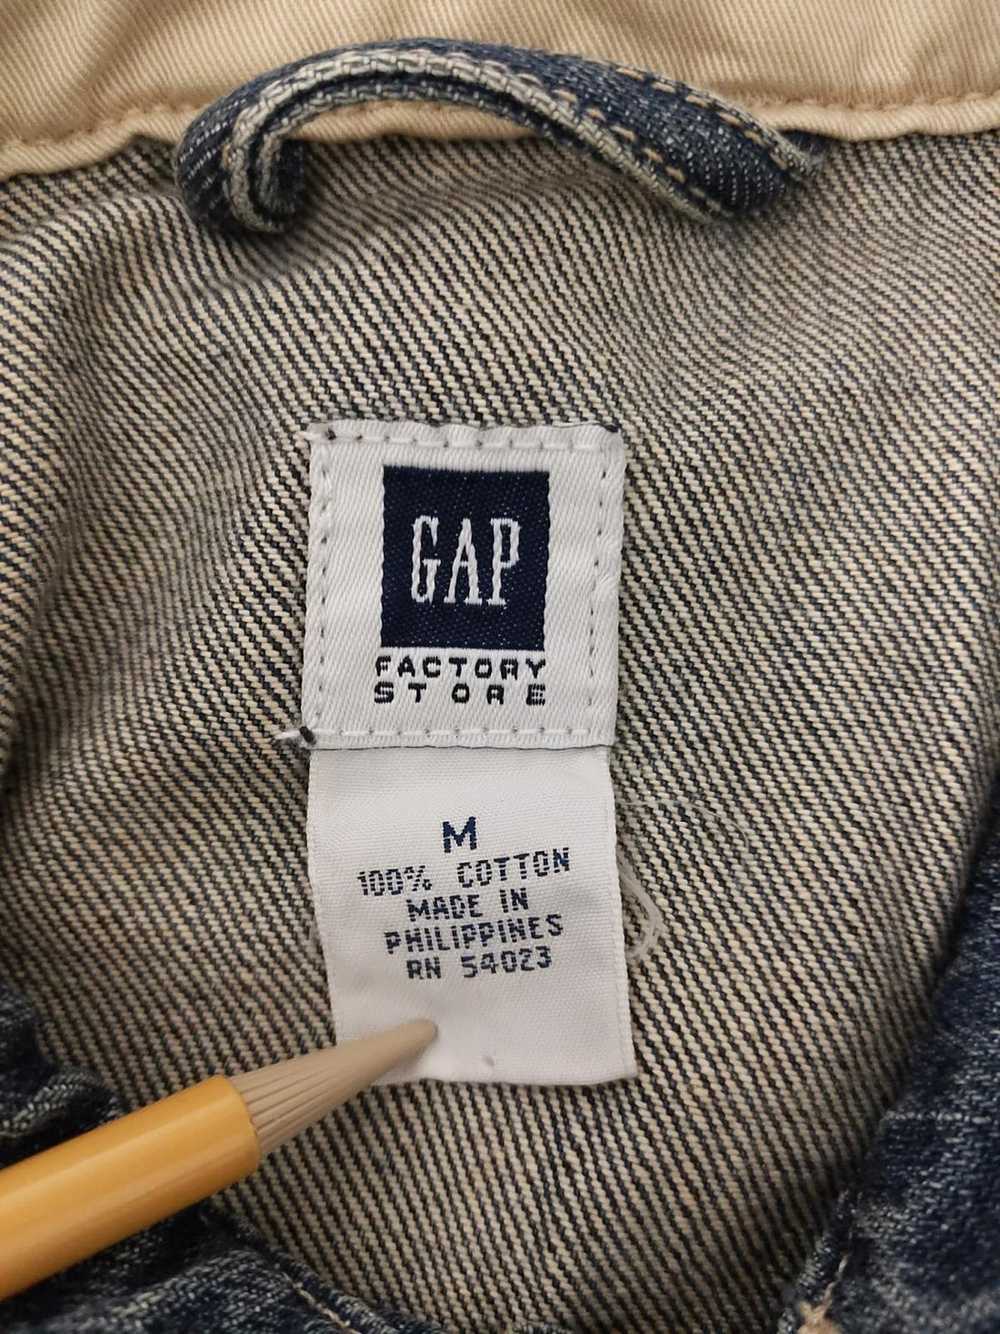 Gap Factory Store Denim Jacket - image 3